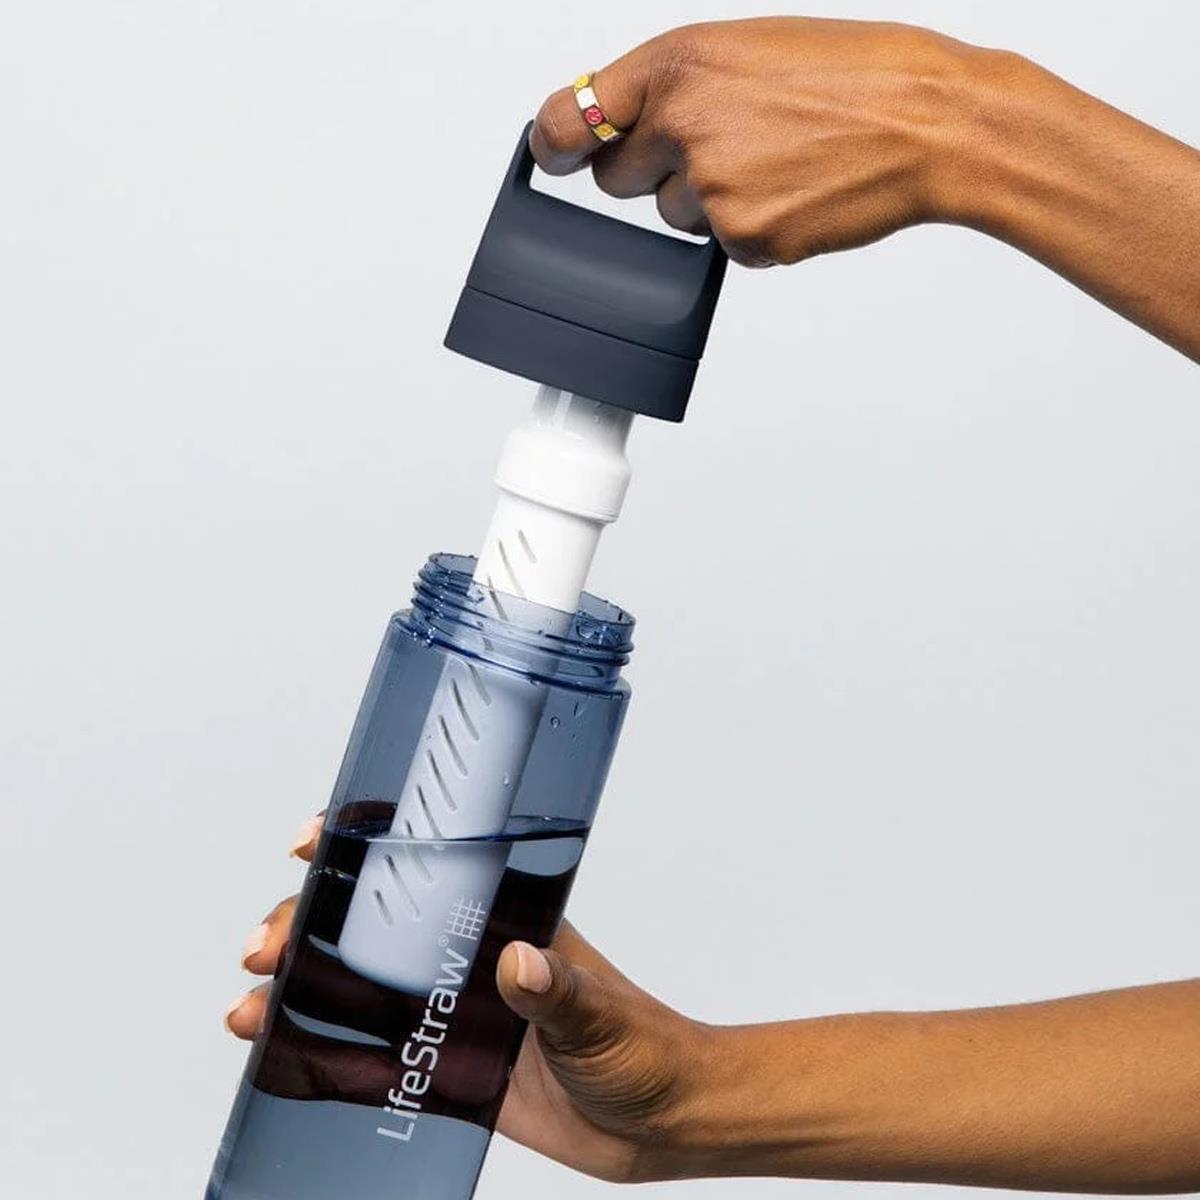 Lifestraw Go Go 2.0 Water Filter Bottle 1L - Navy